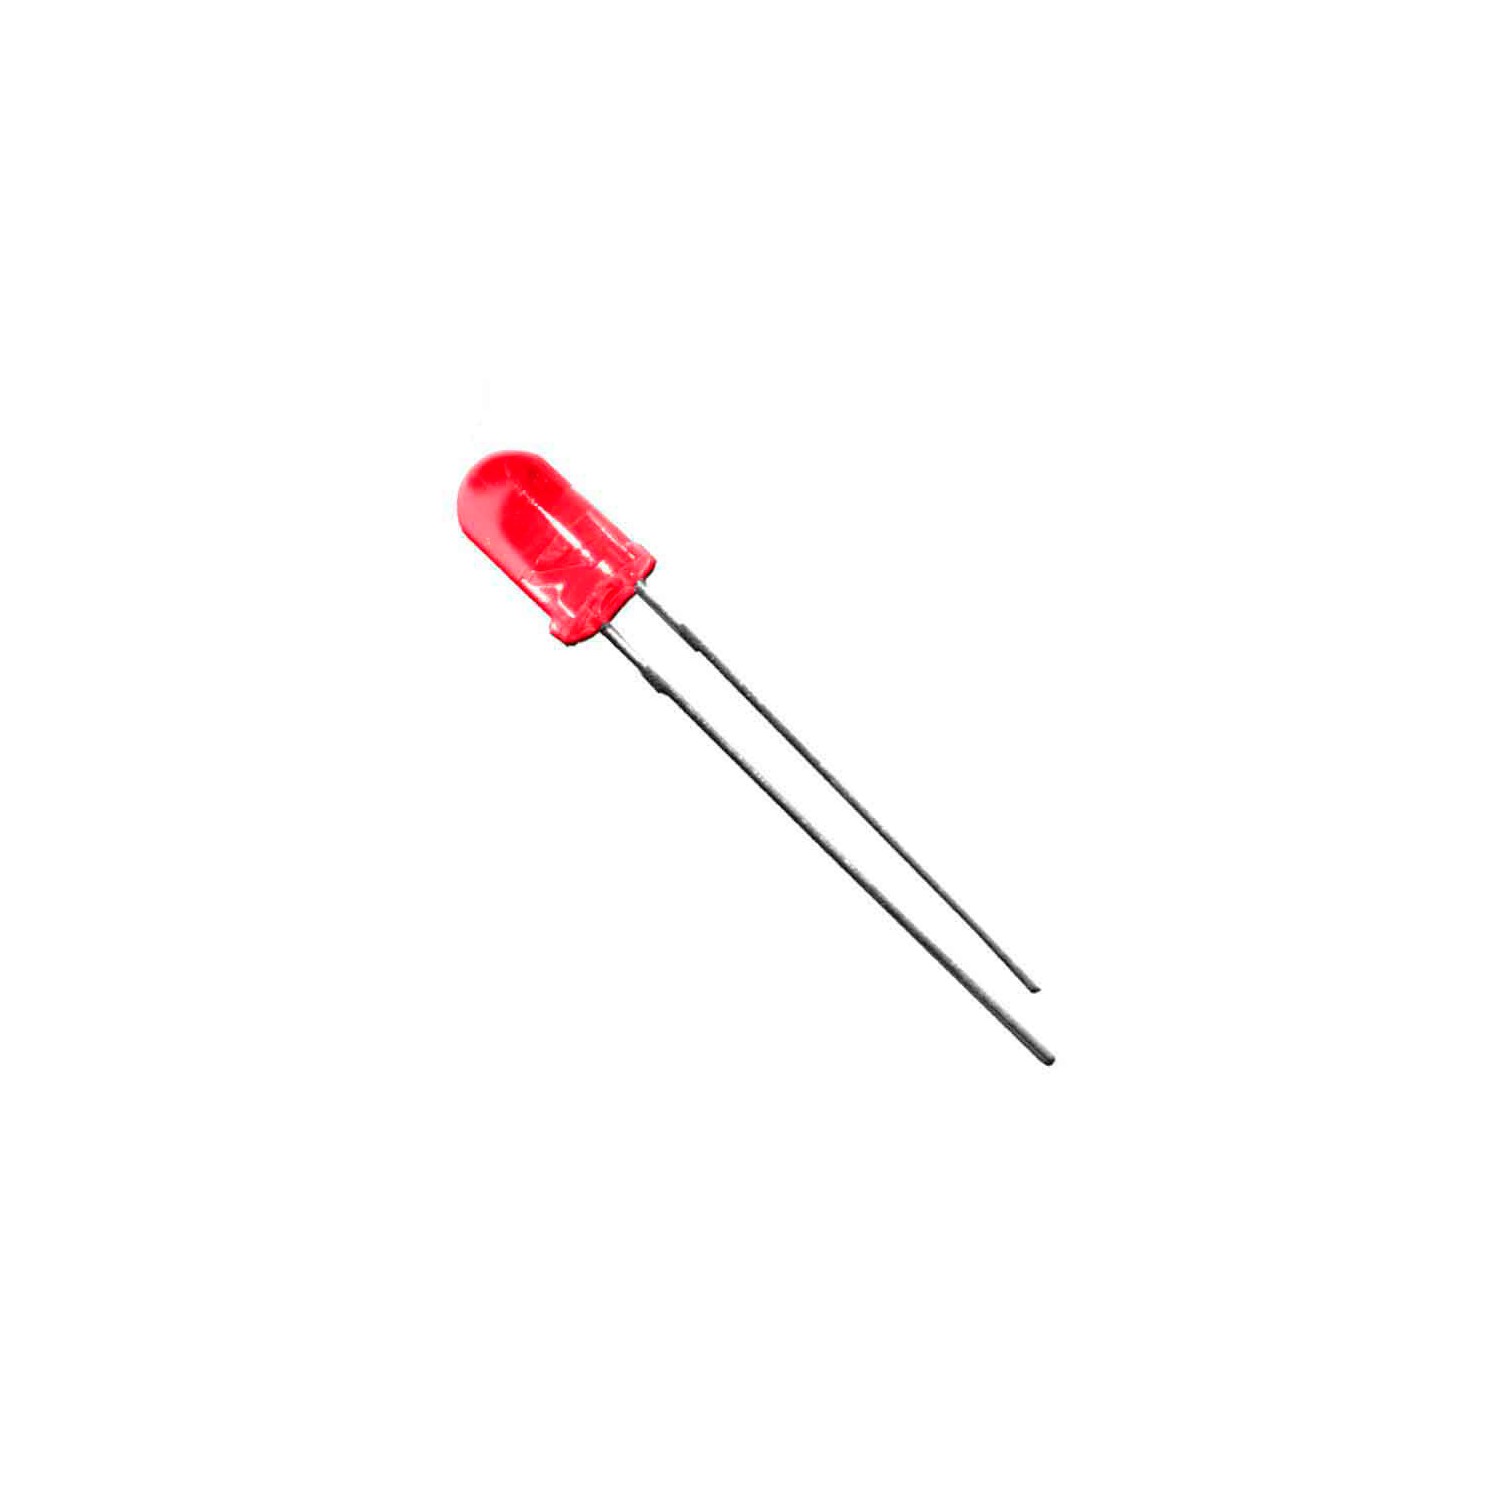 Diodo led color rojo 5mm (manualidades) 1,9v edm